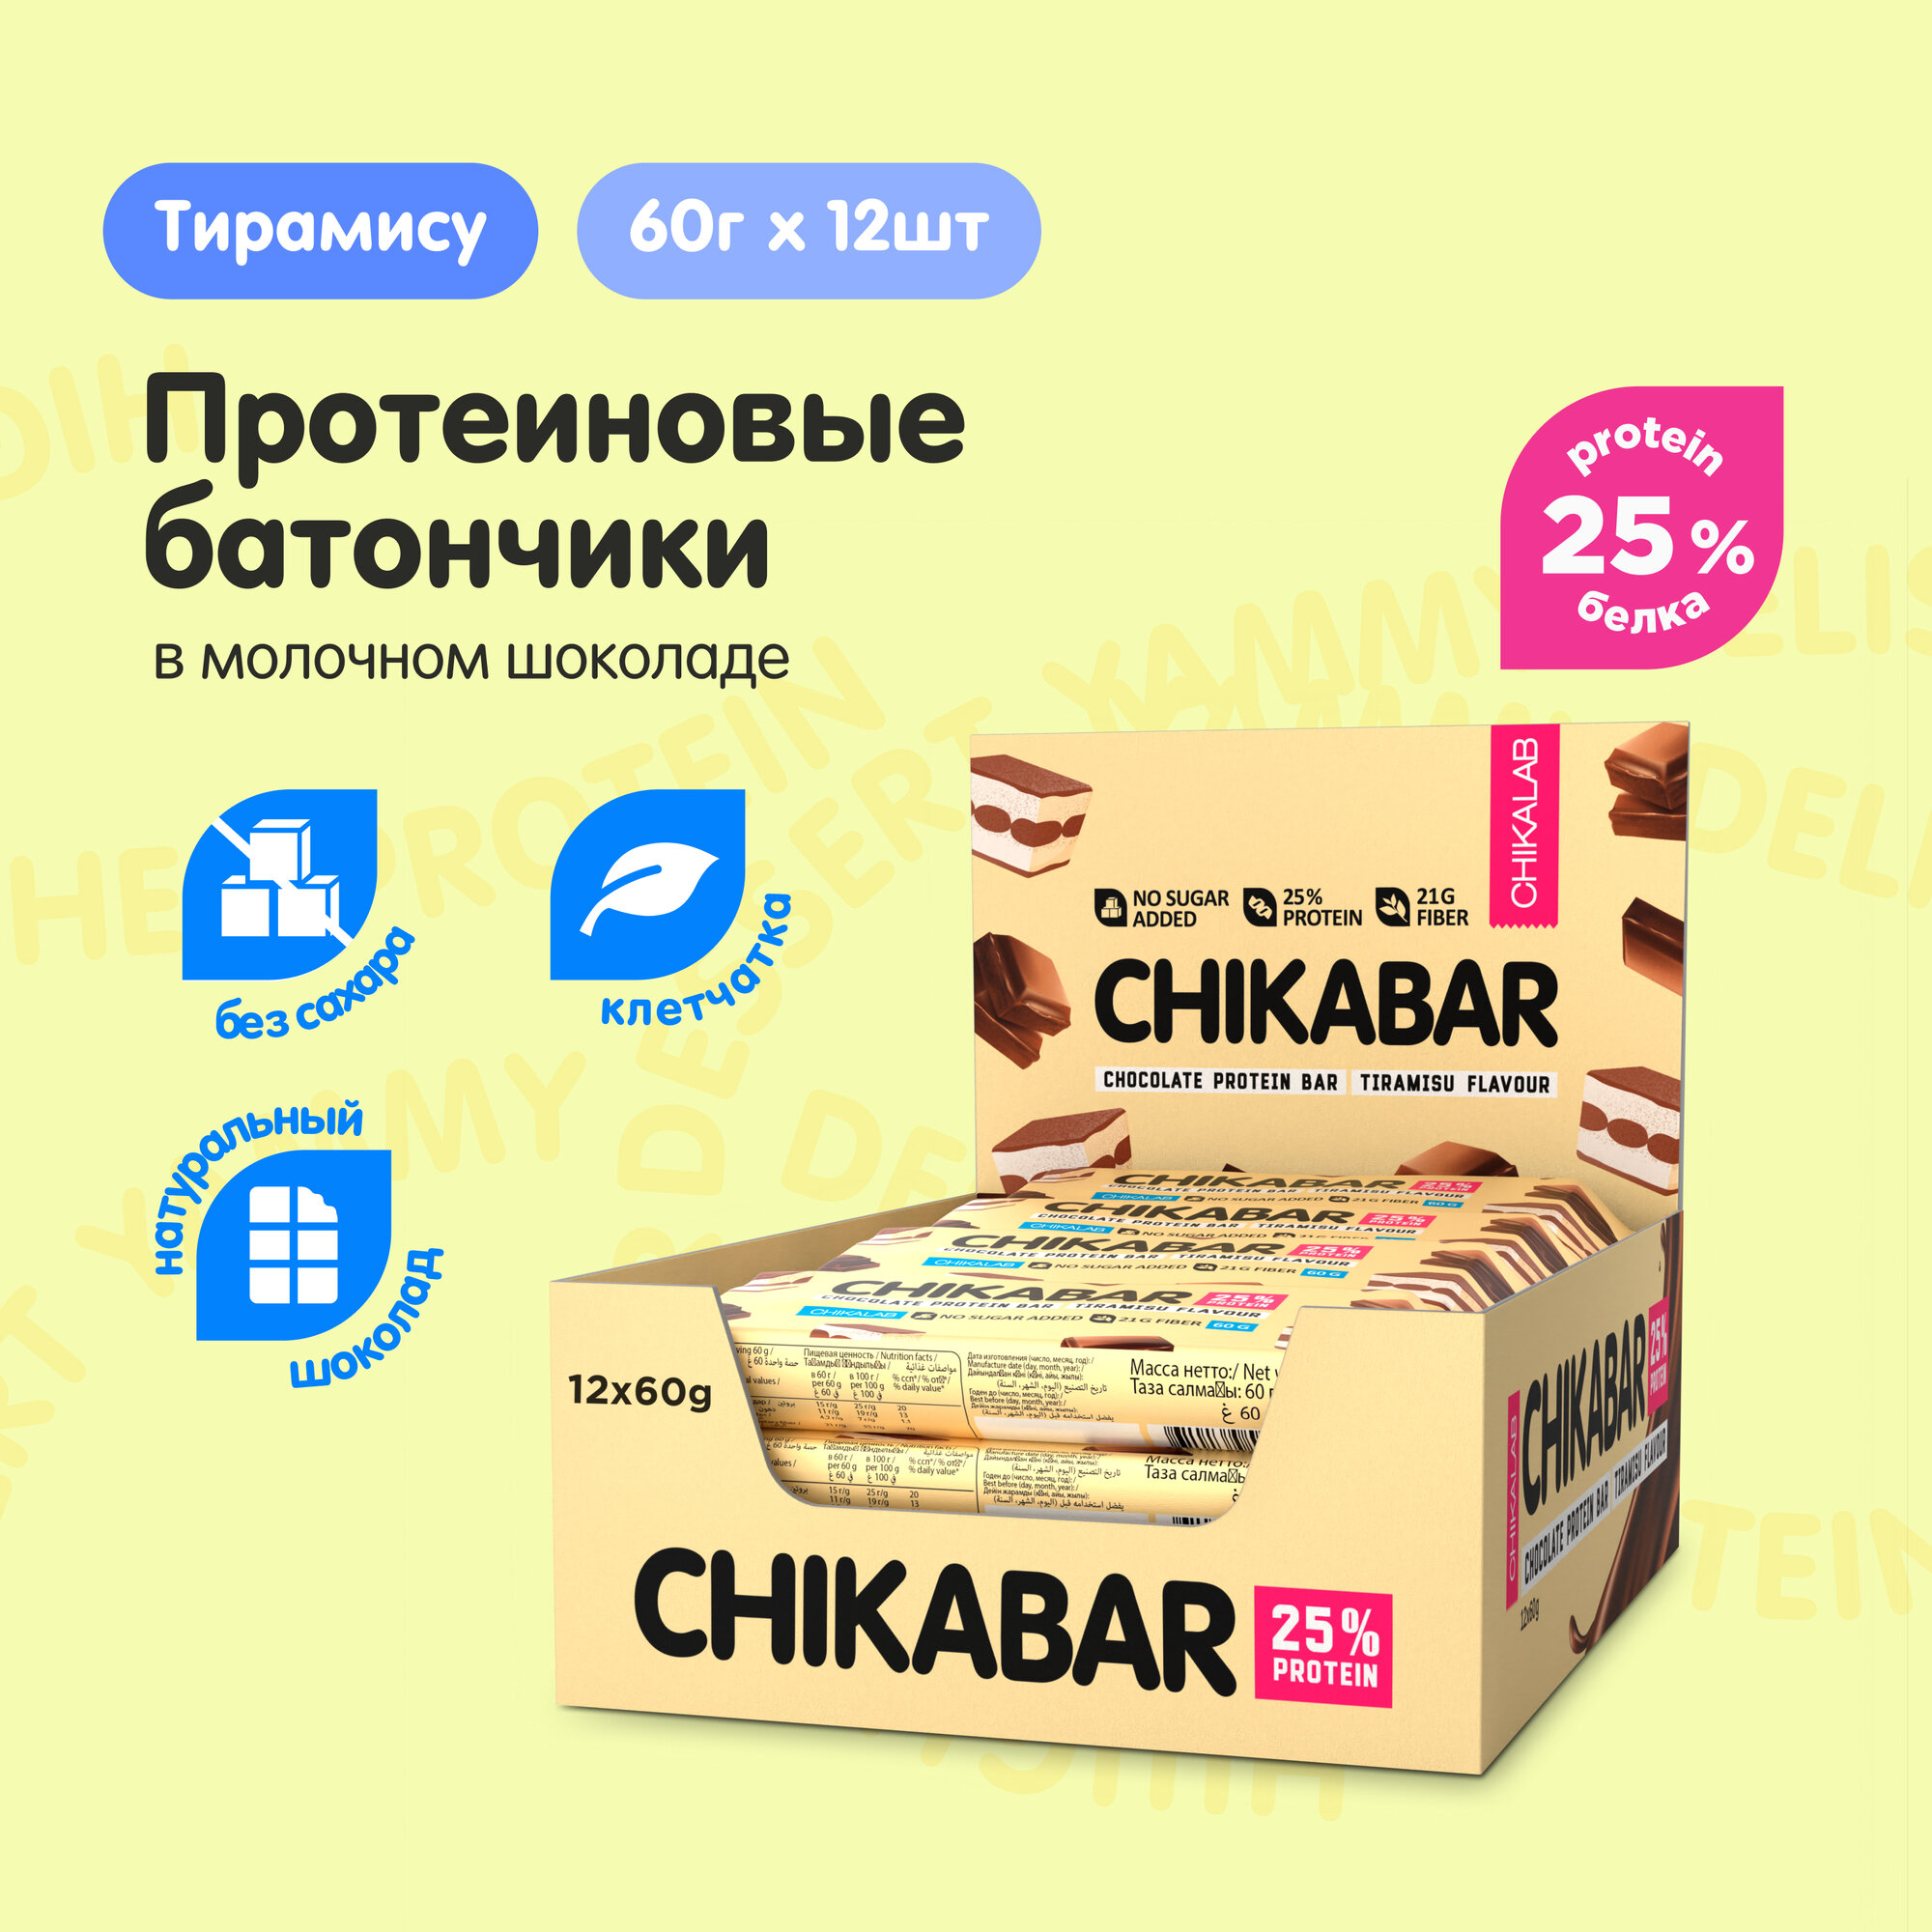 CHIKALAB CHIKABAR Протеиновые батончики в шоколаде без сахара "Тирамису", 12шт х 60г